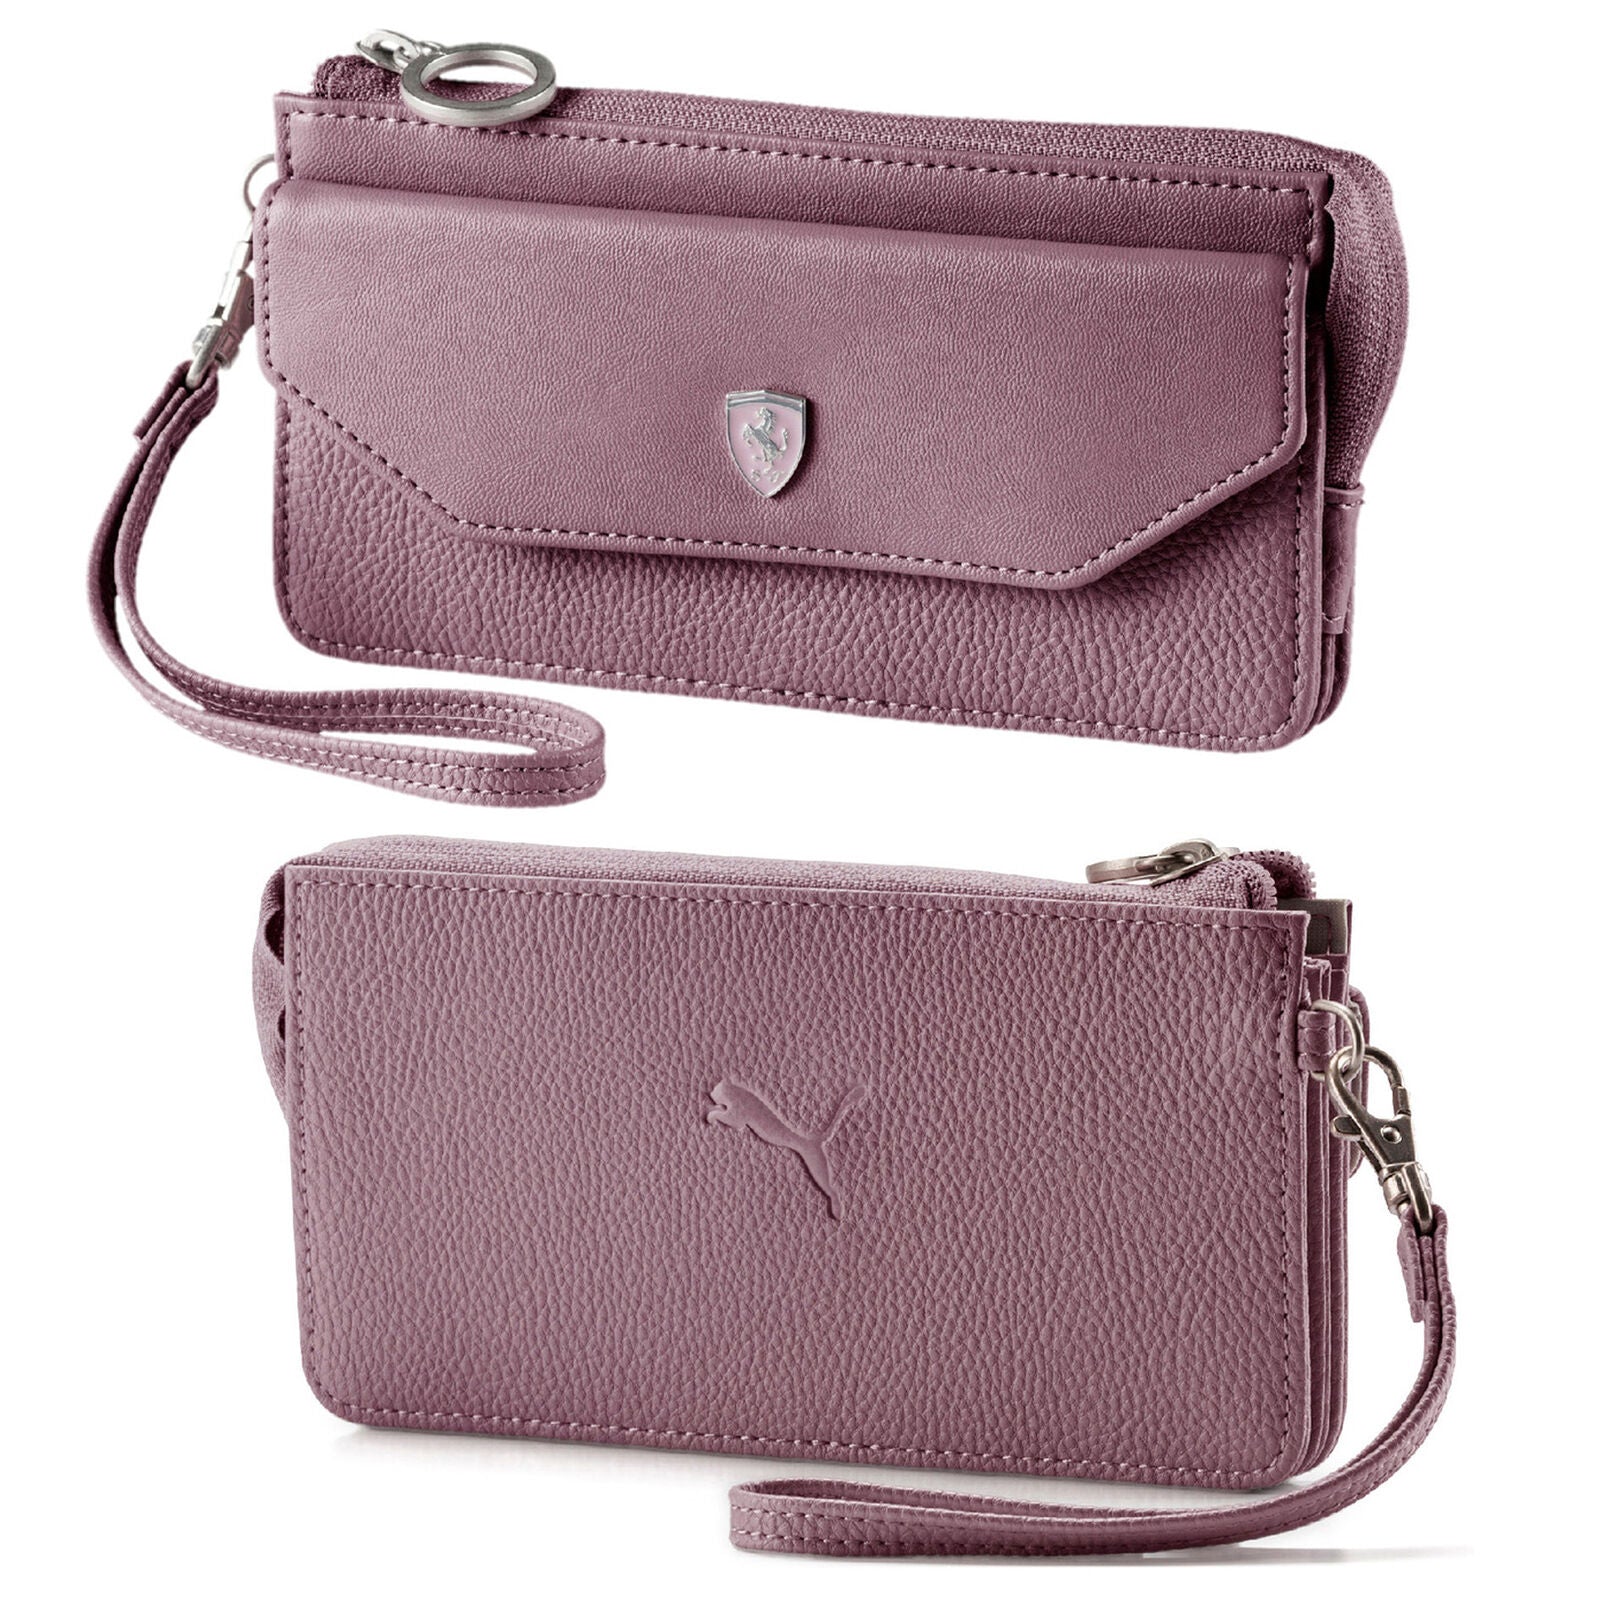 Puma Ferrari LS Women's Shopper Handbag Tote | eBay